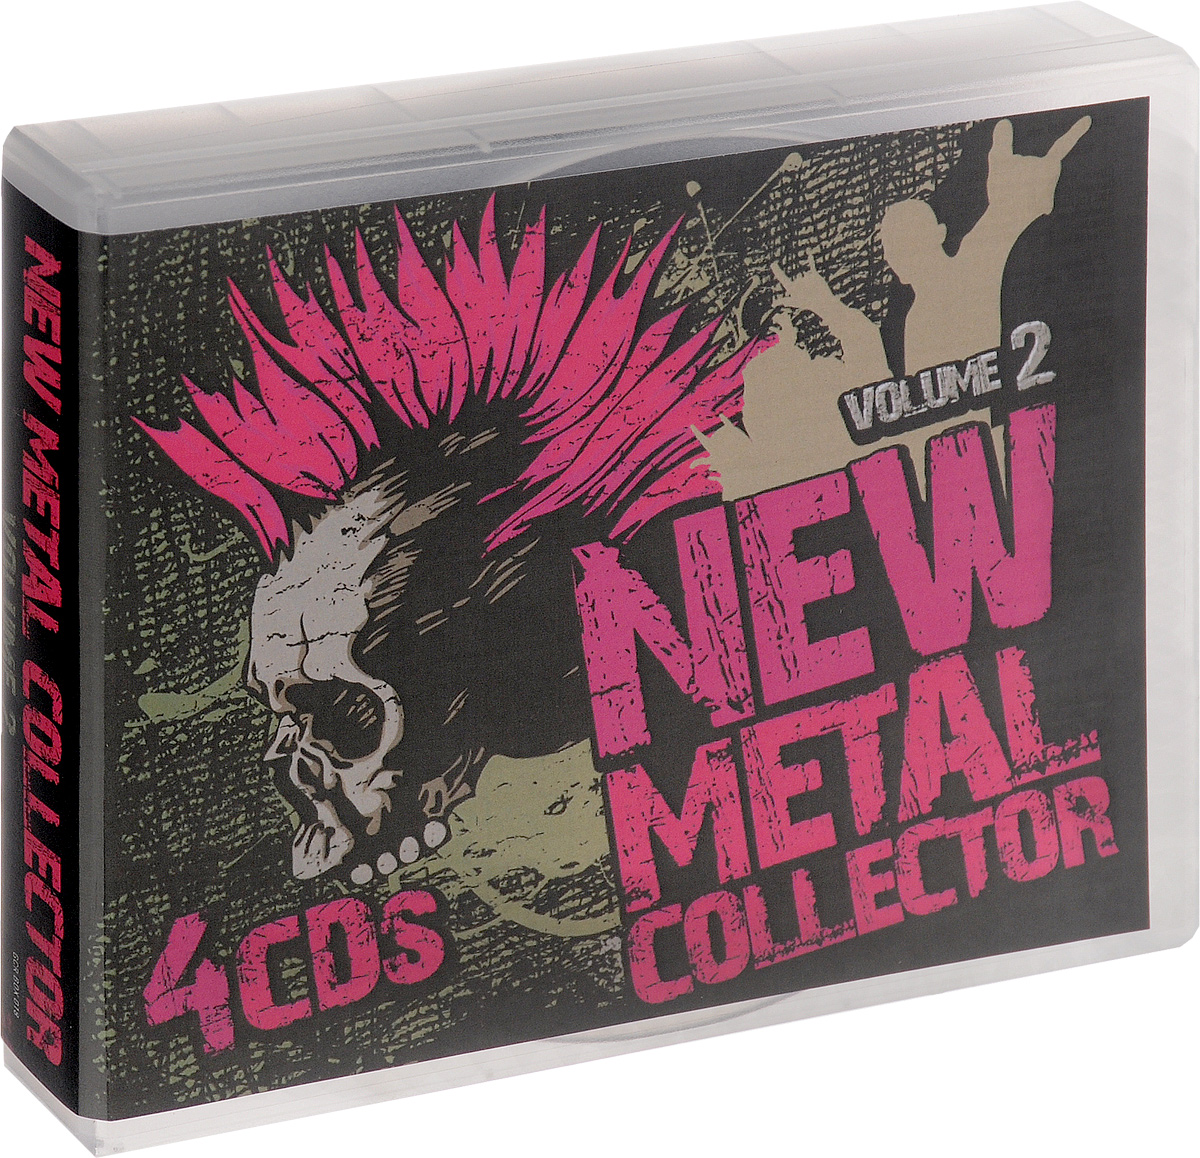 New Metal Collector. Volume 2 (4 CD)